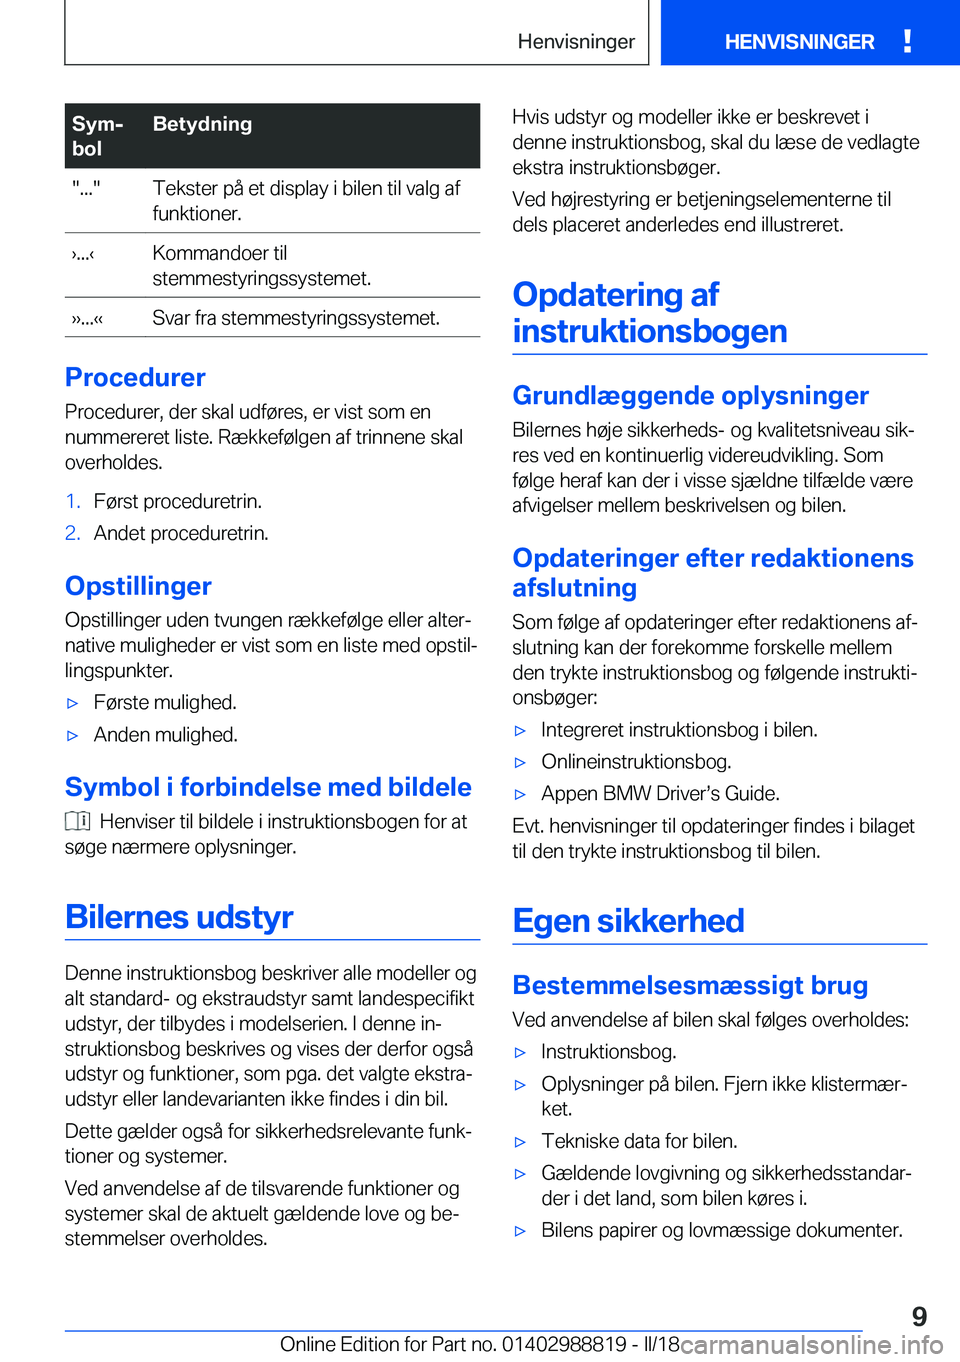 BMW X5 2018  InstruktionsbØger (in Danish) �S�y�mj
�b�o�l�B�e�t�y�d�n�i�n�g�"�.�.�.�"�T�e�k�s�t�e�r� �p�å� �e�t� �d�i�s�p�l�a�y� �i� �b�i�l�e�n� �t�i�l� �v�a�l�g� �a�f
�f�u�n�k�t�i�o�n�e�r�.